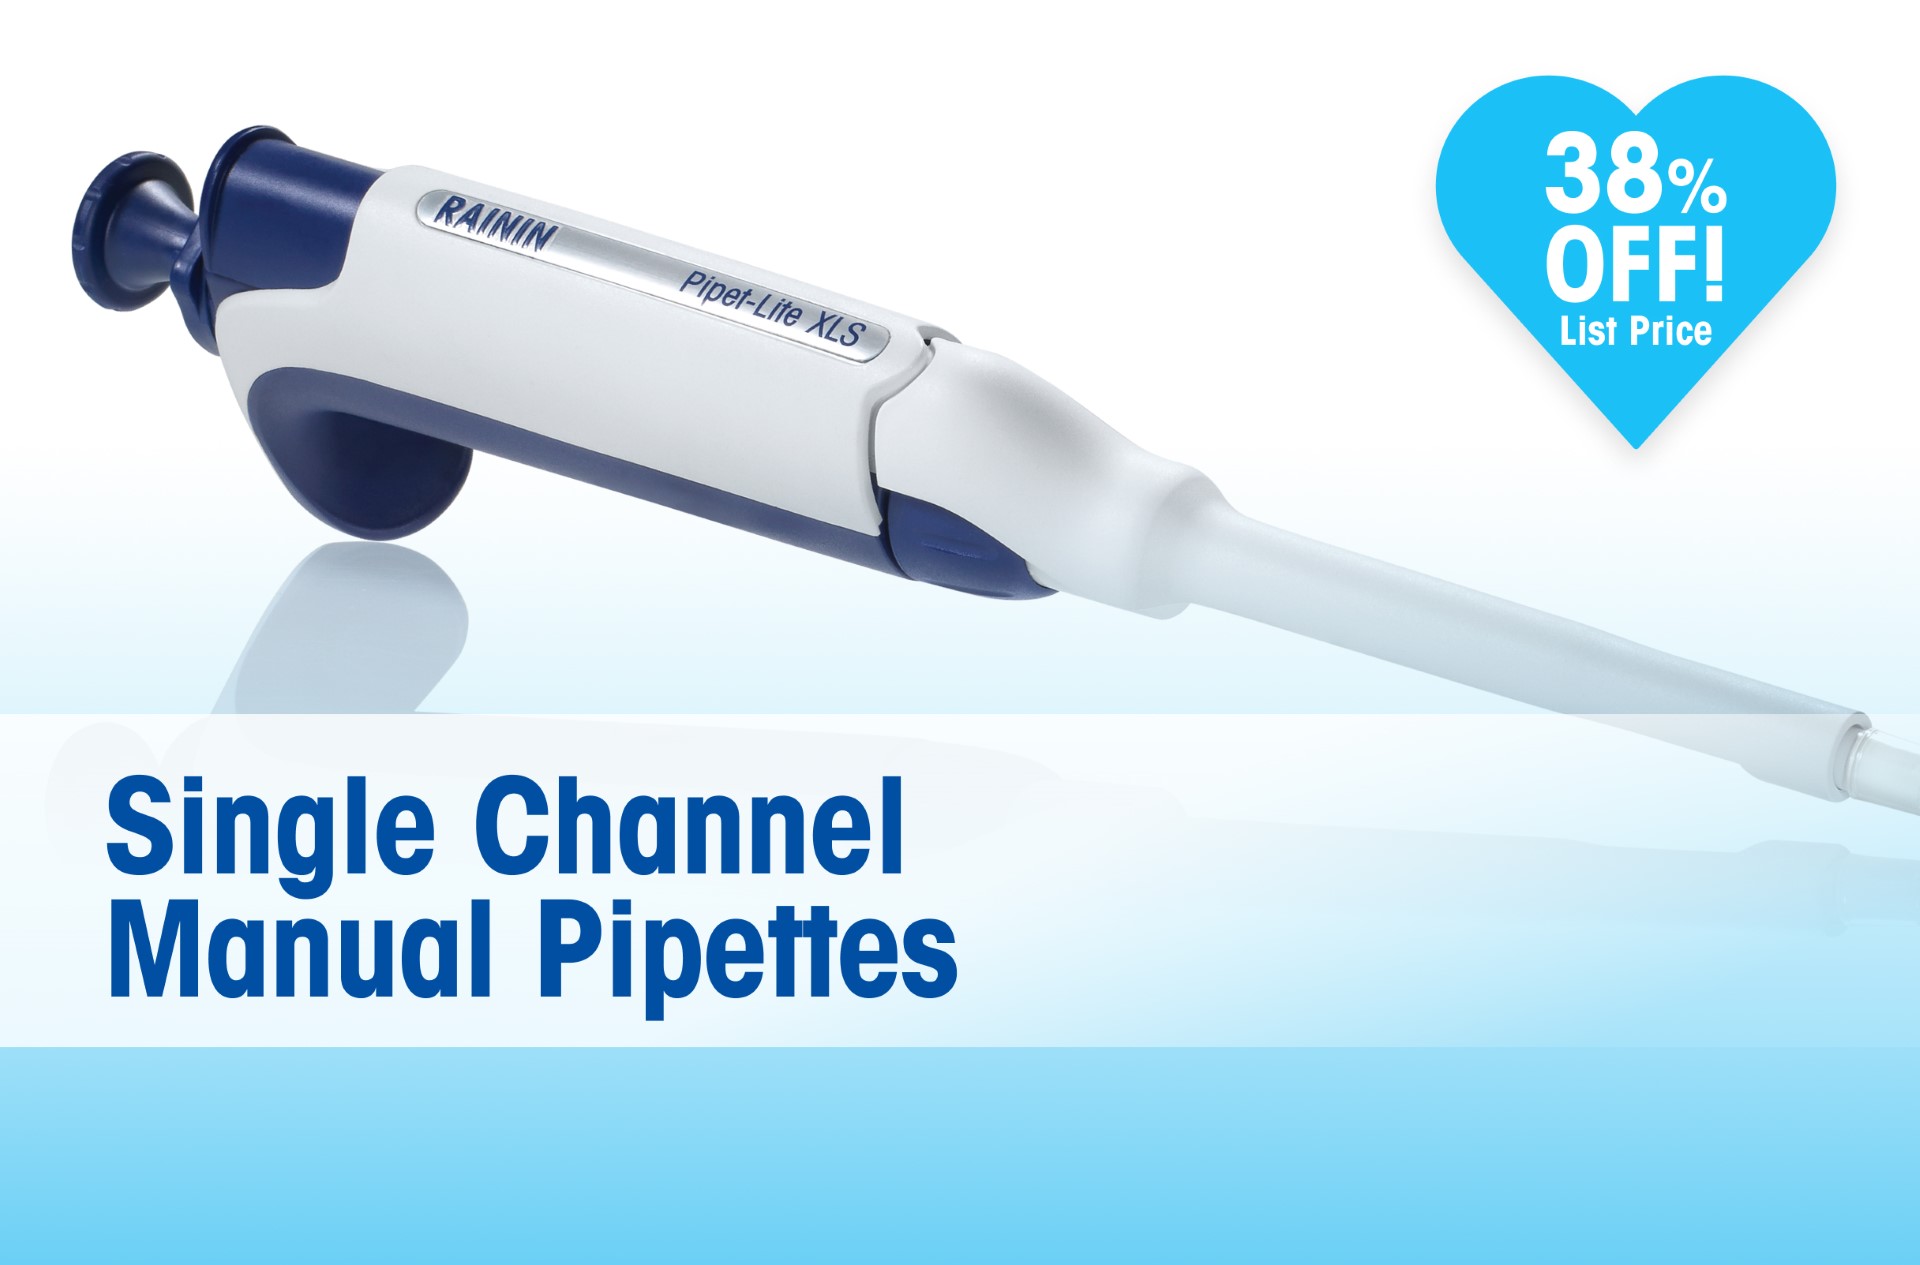 Save 38% off Rainin XLS single channel pipettes!